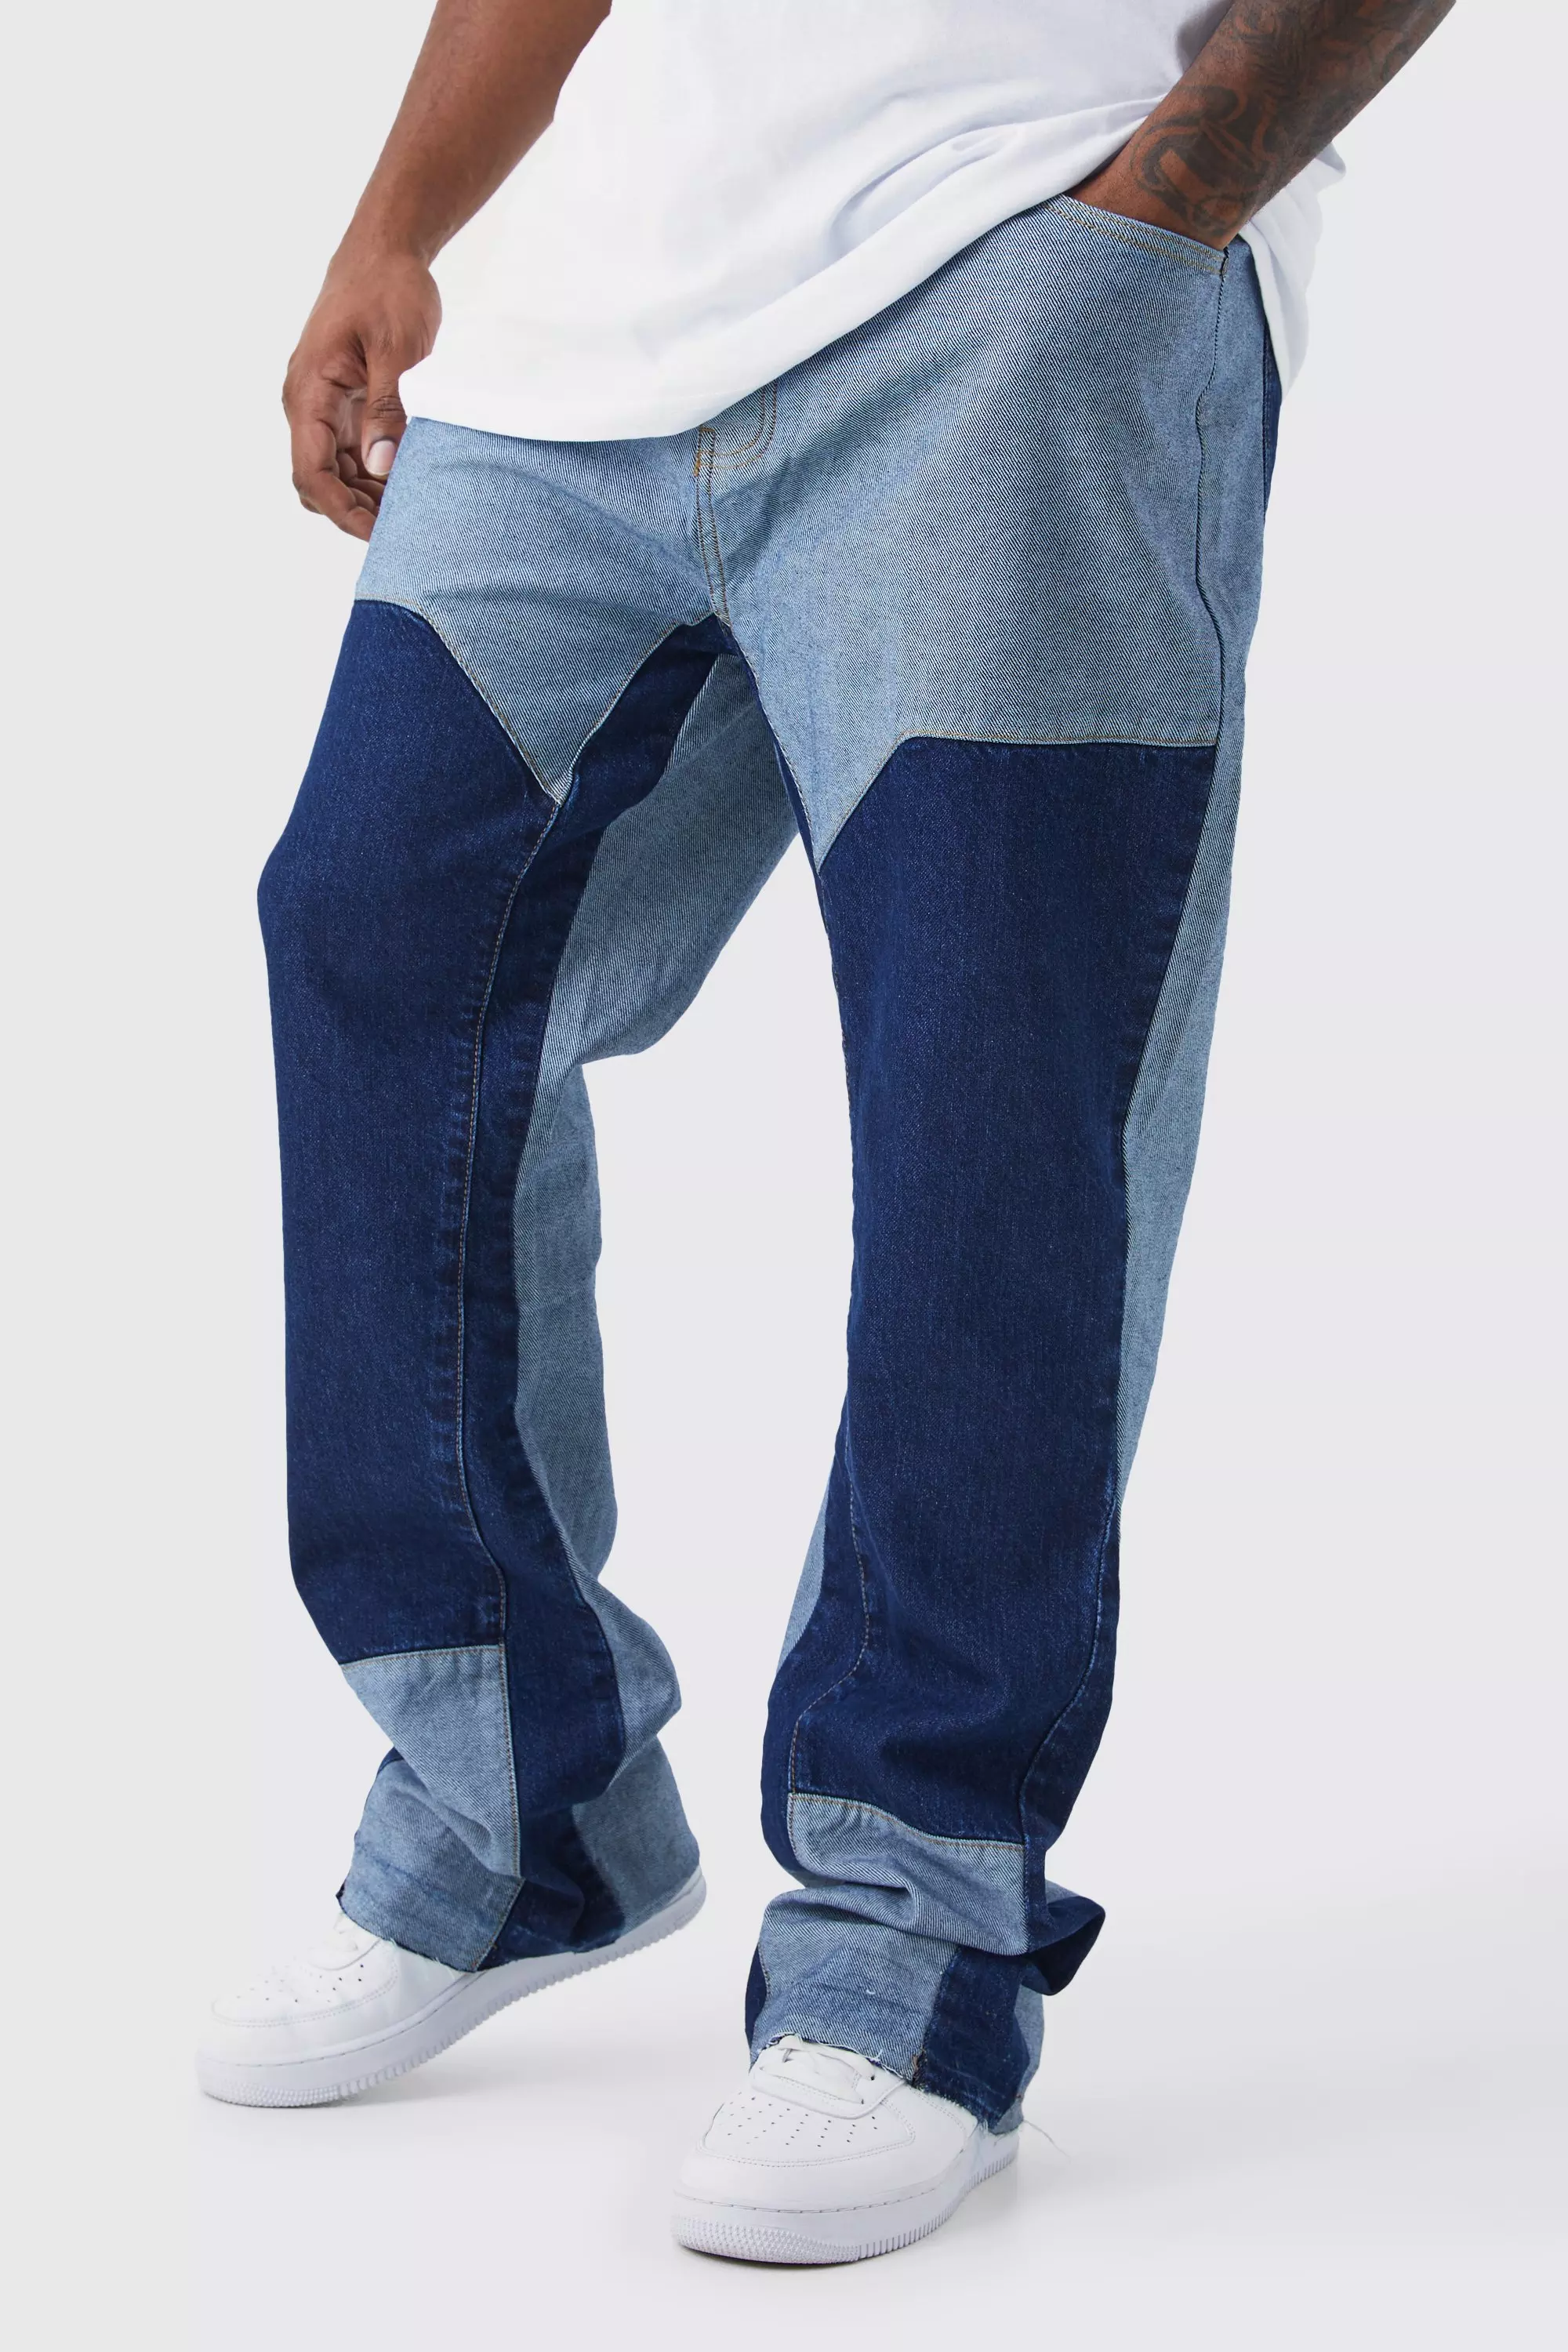 Plus Slim Rigid Flare Tinted Carpenter Jeans Vintage blue